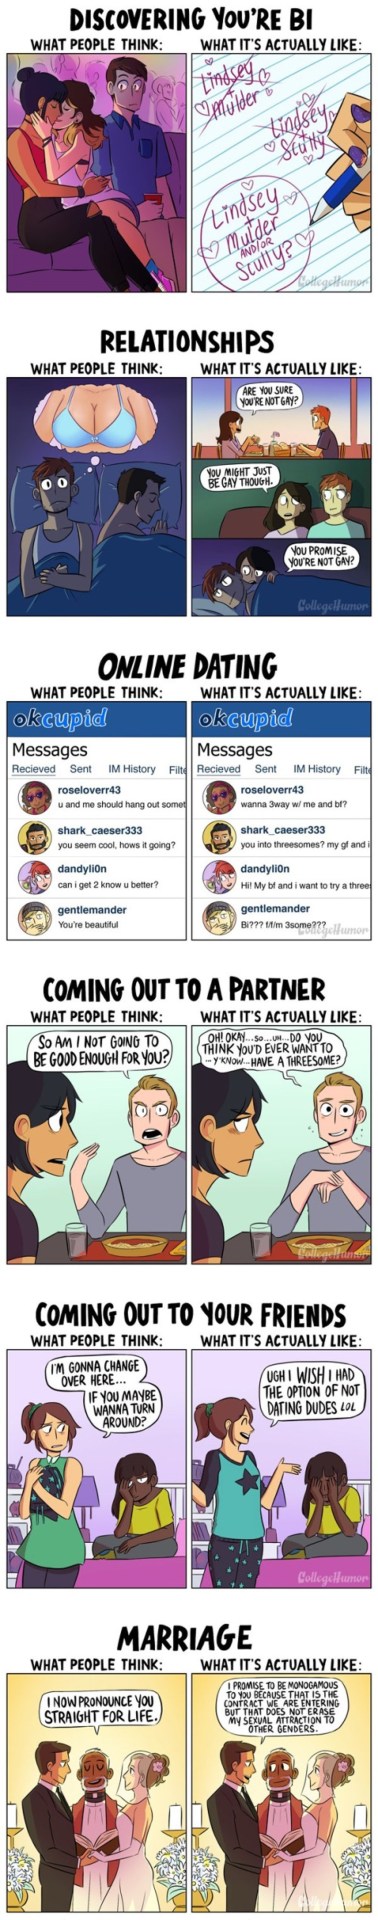 Online Dating Comics